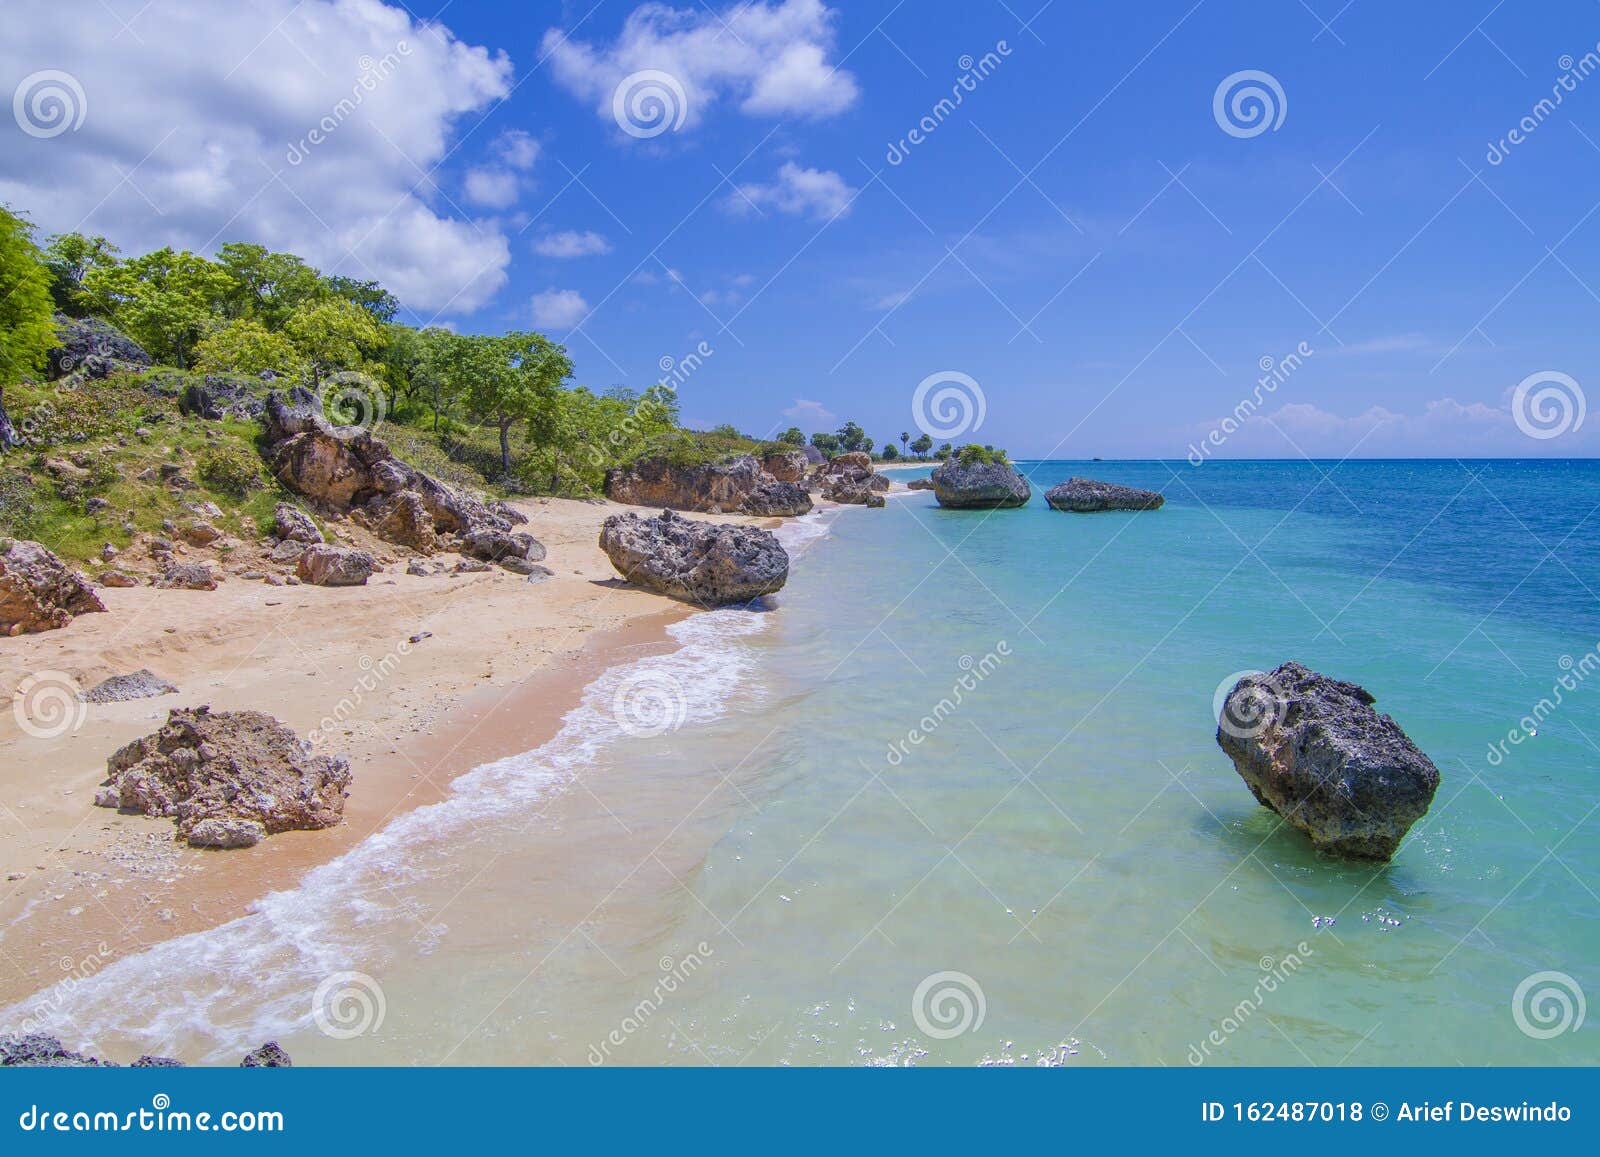 beach of timor leste, baucau